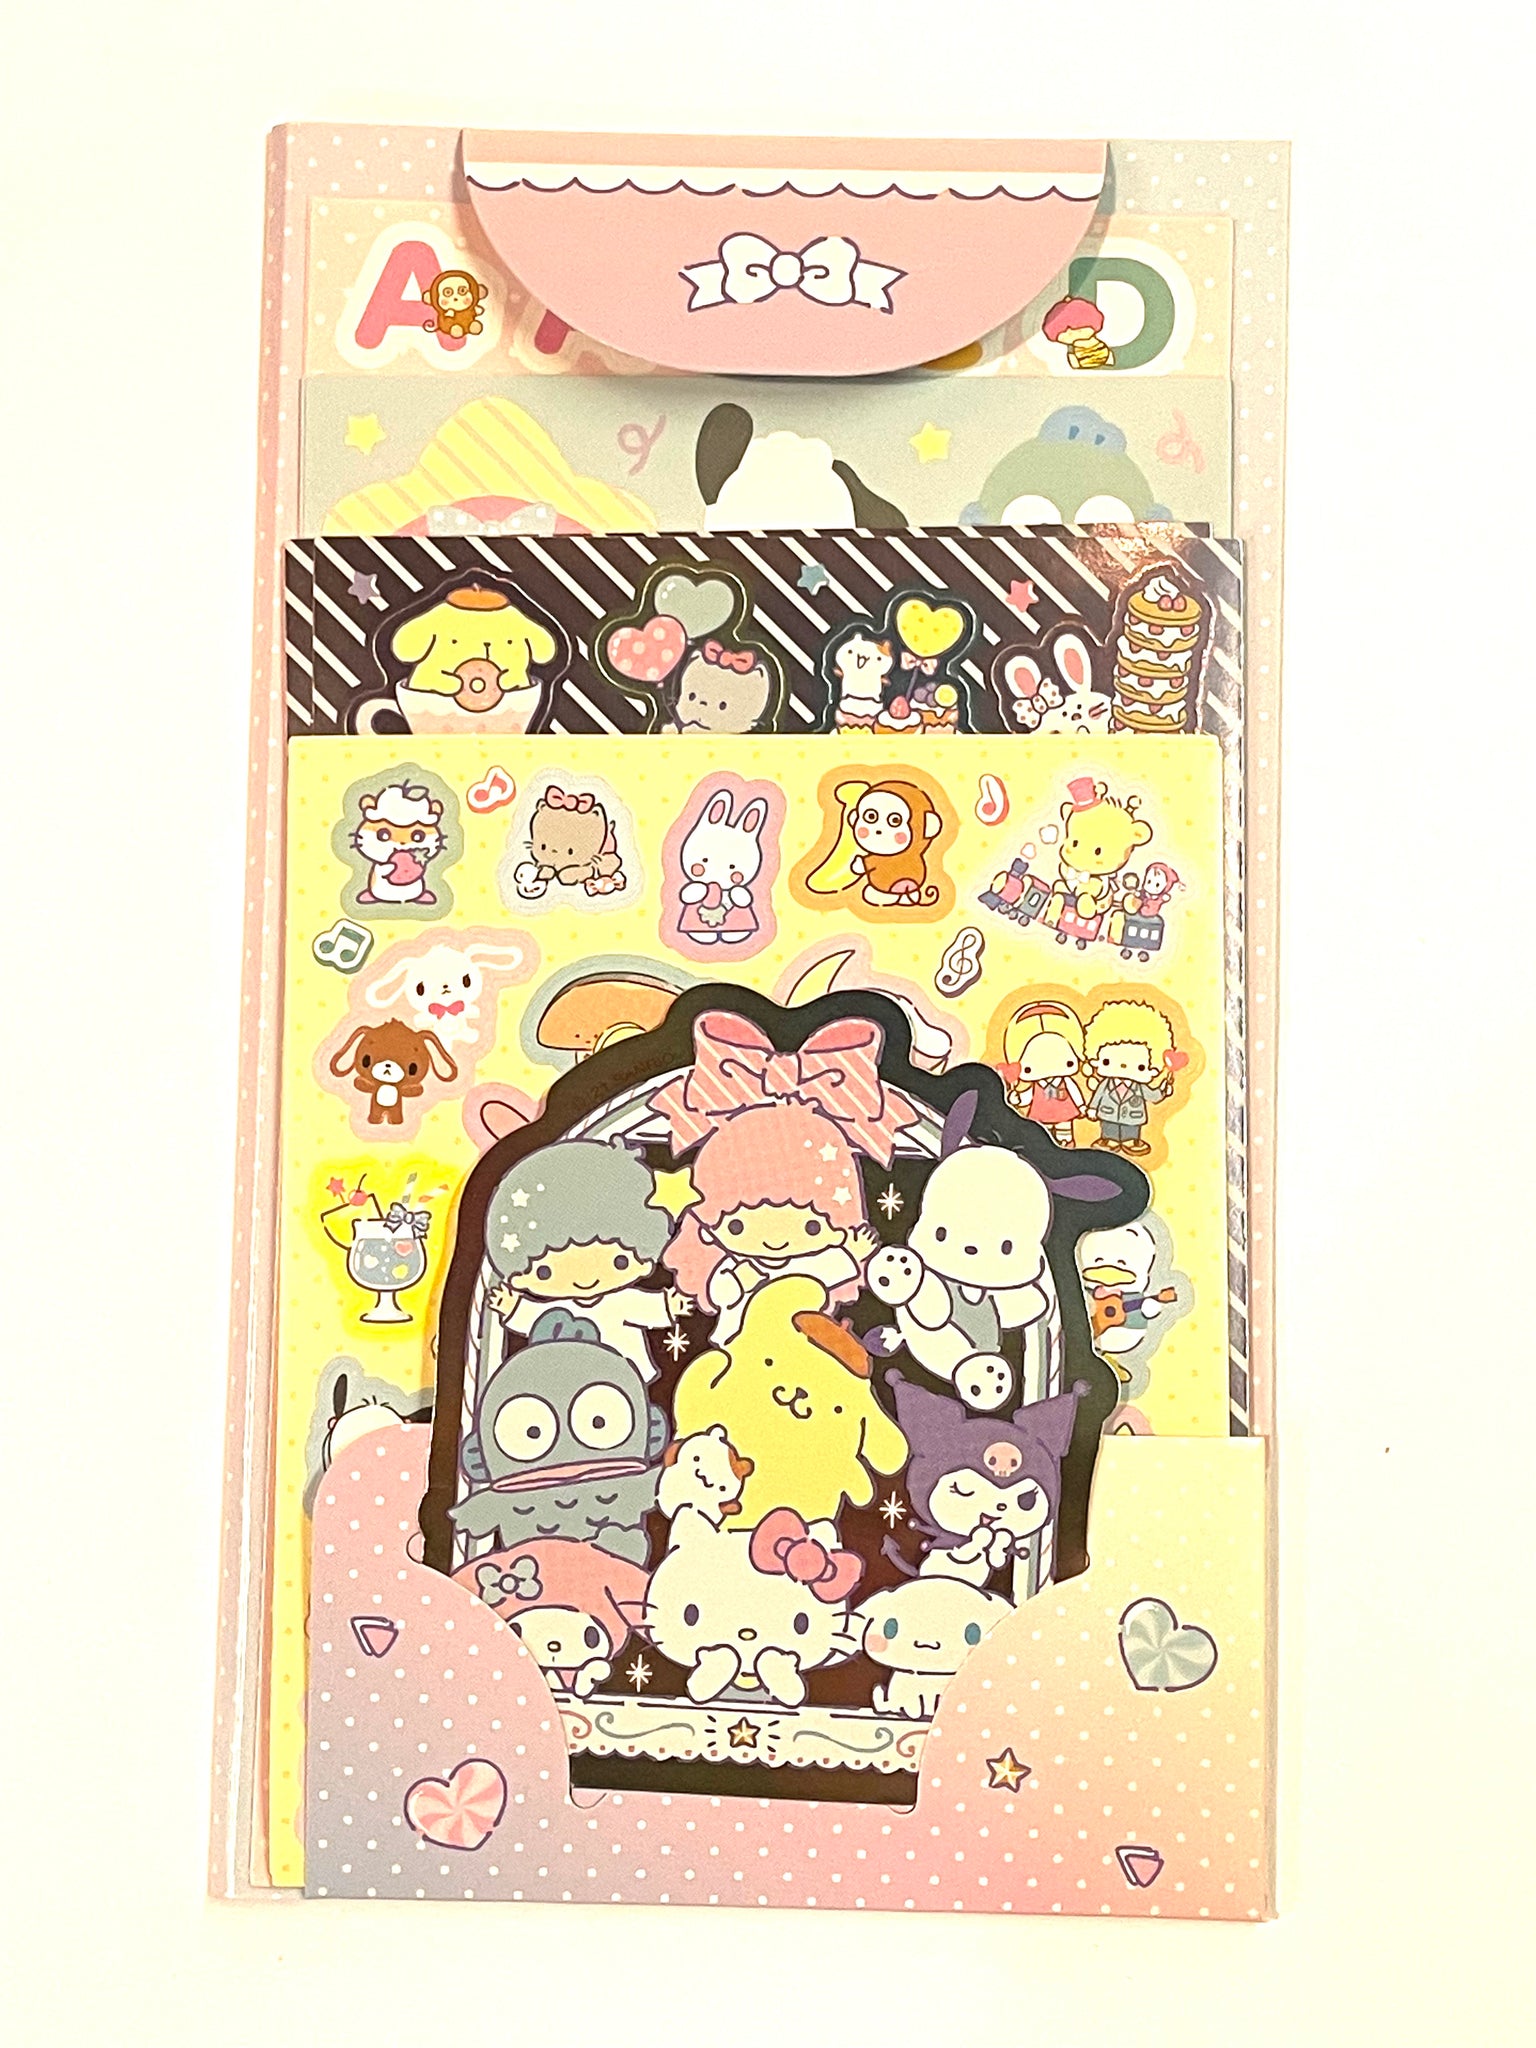 Hello Kitty 100-Piece Glitter Sticker Sheet